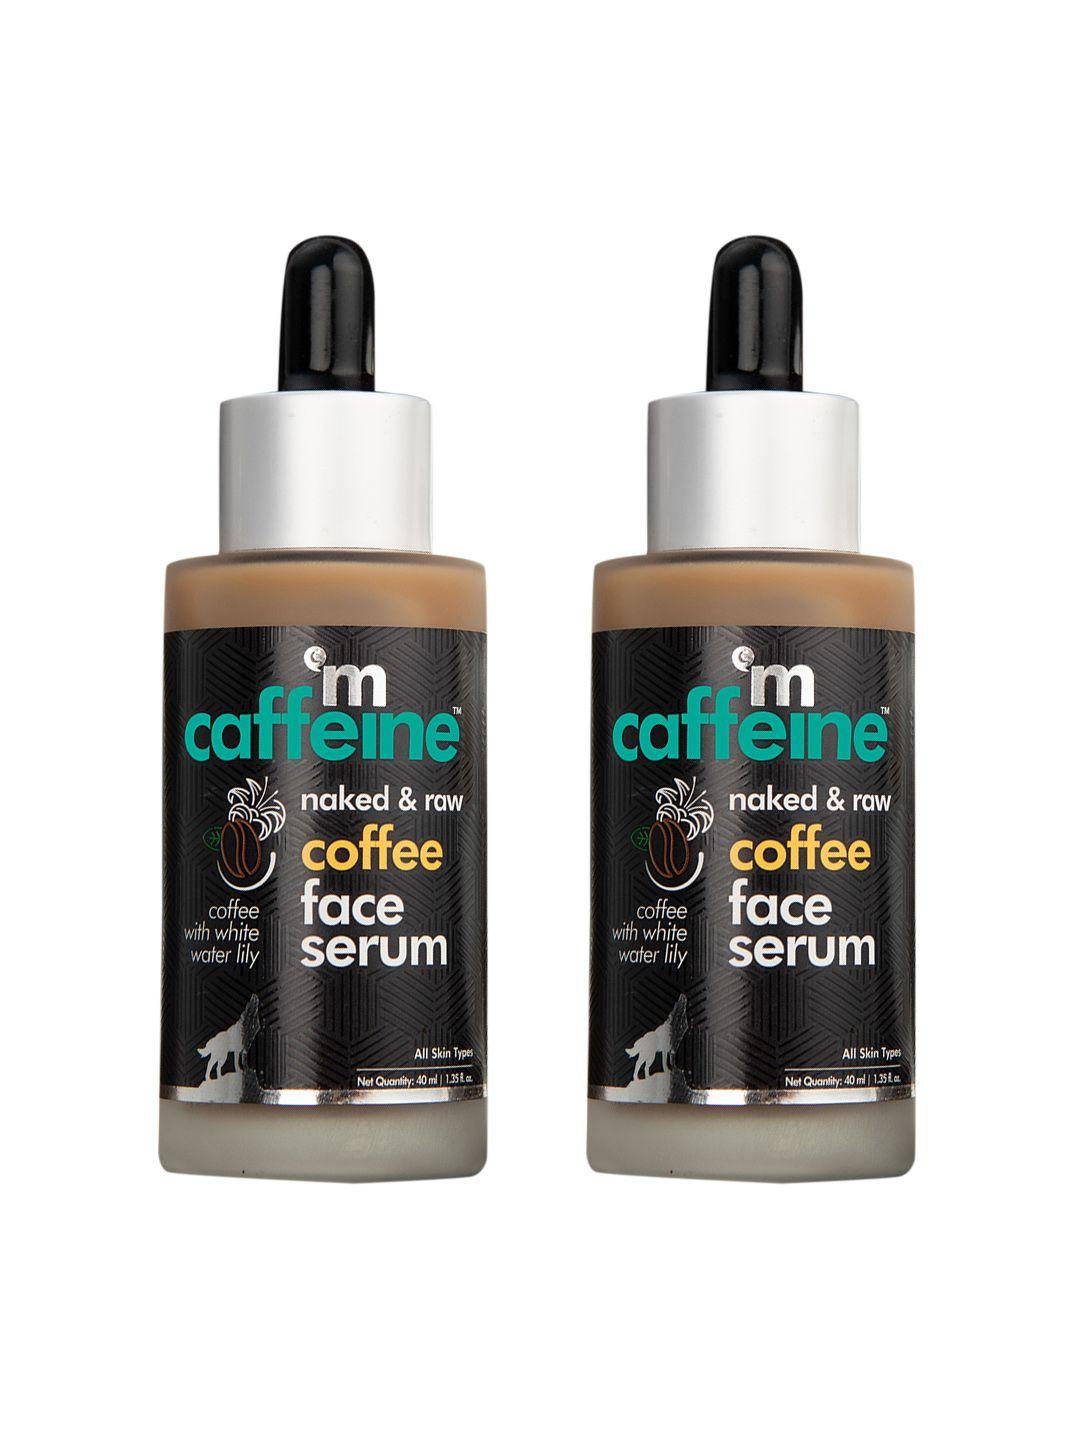 mcaffeine set of 2 coffee hydrating face serum for glowing skin - 40ml each